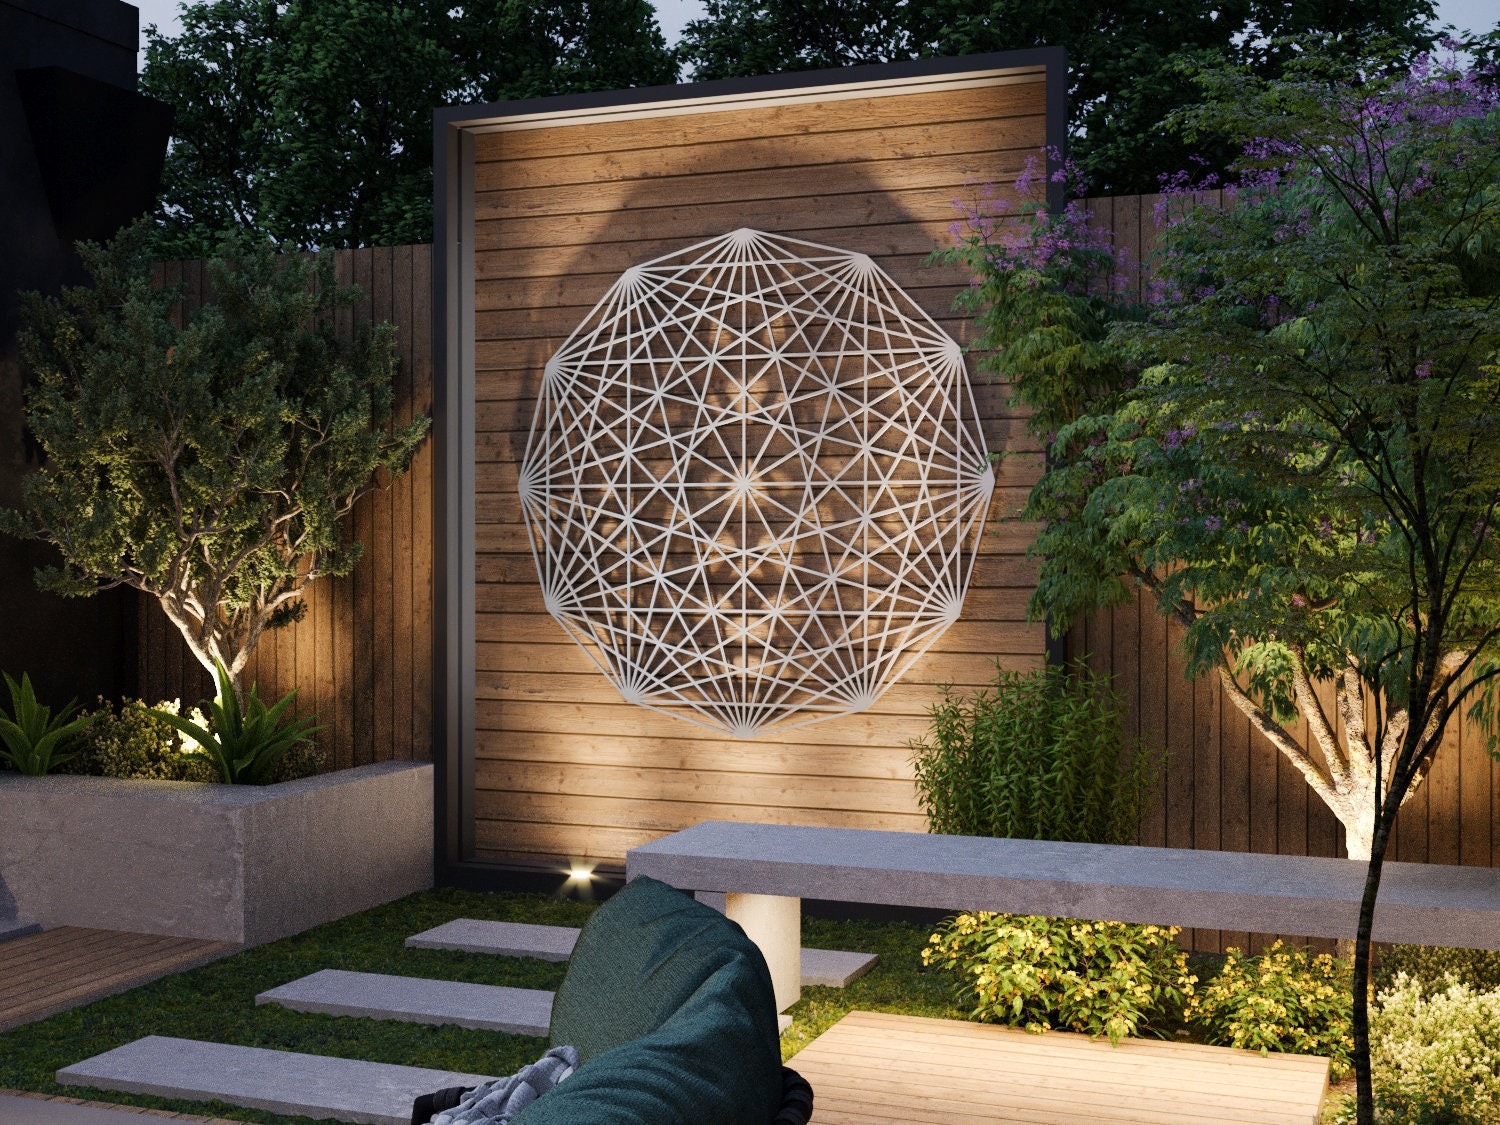 Tesseract Sacred Geometry Outdoor Metal Wall Art Sculpture   Etsy.de